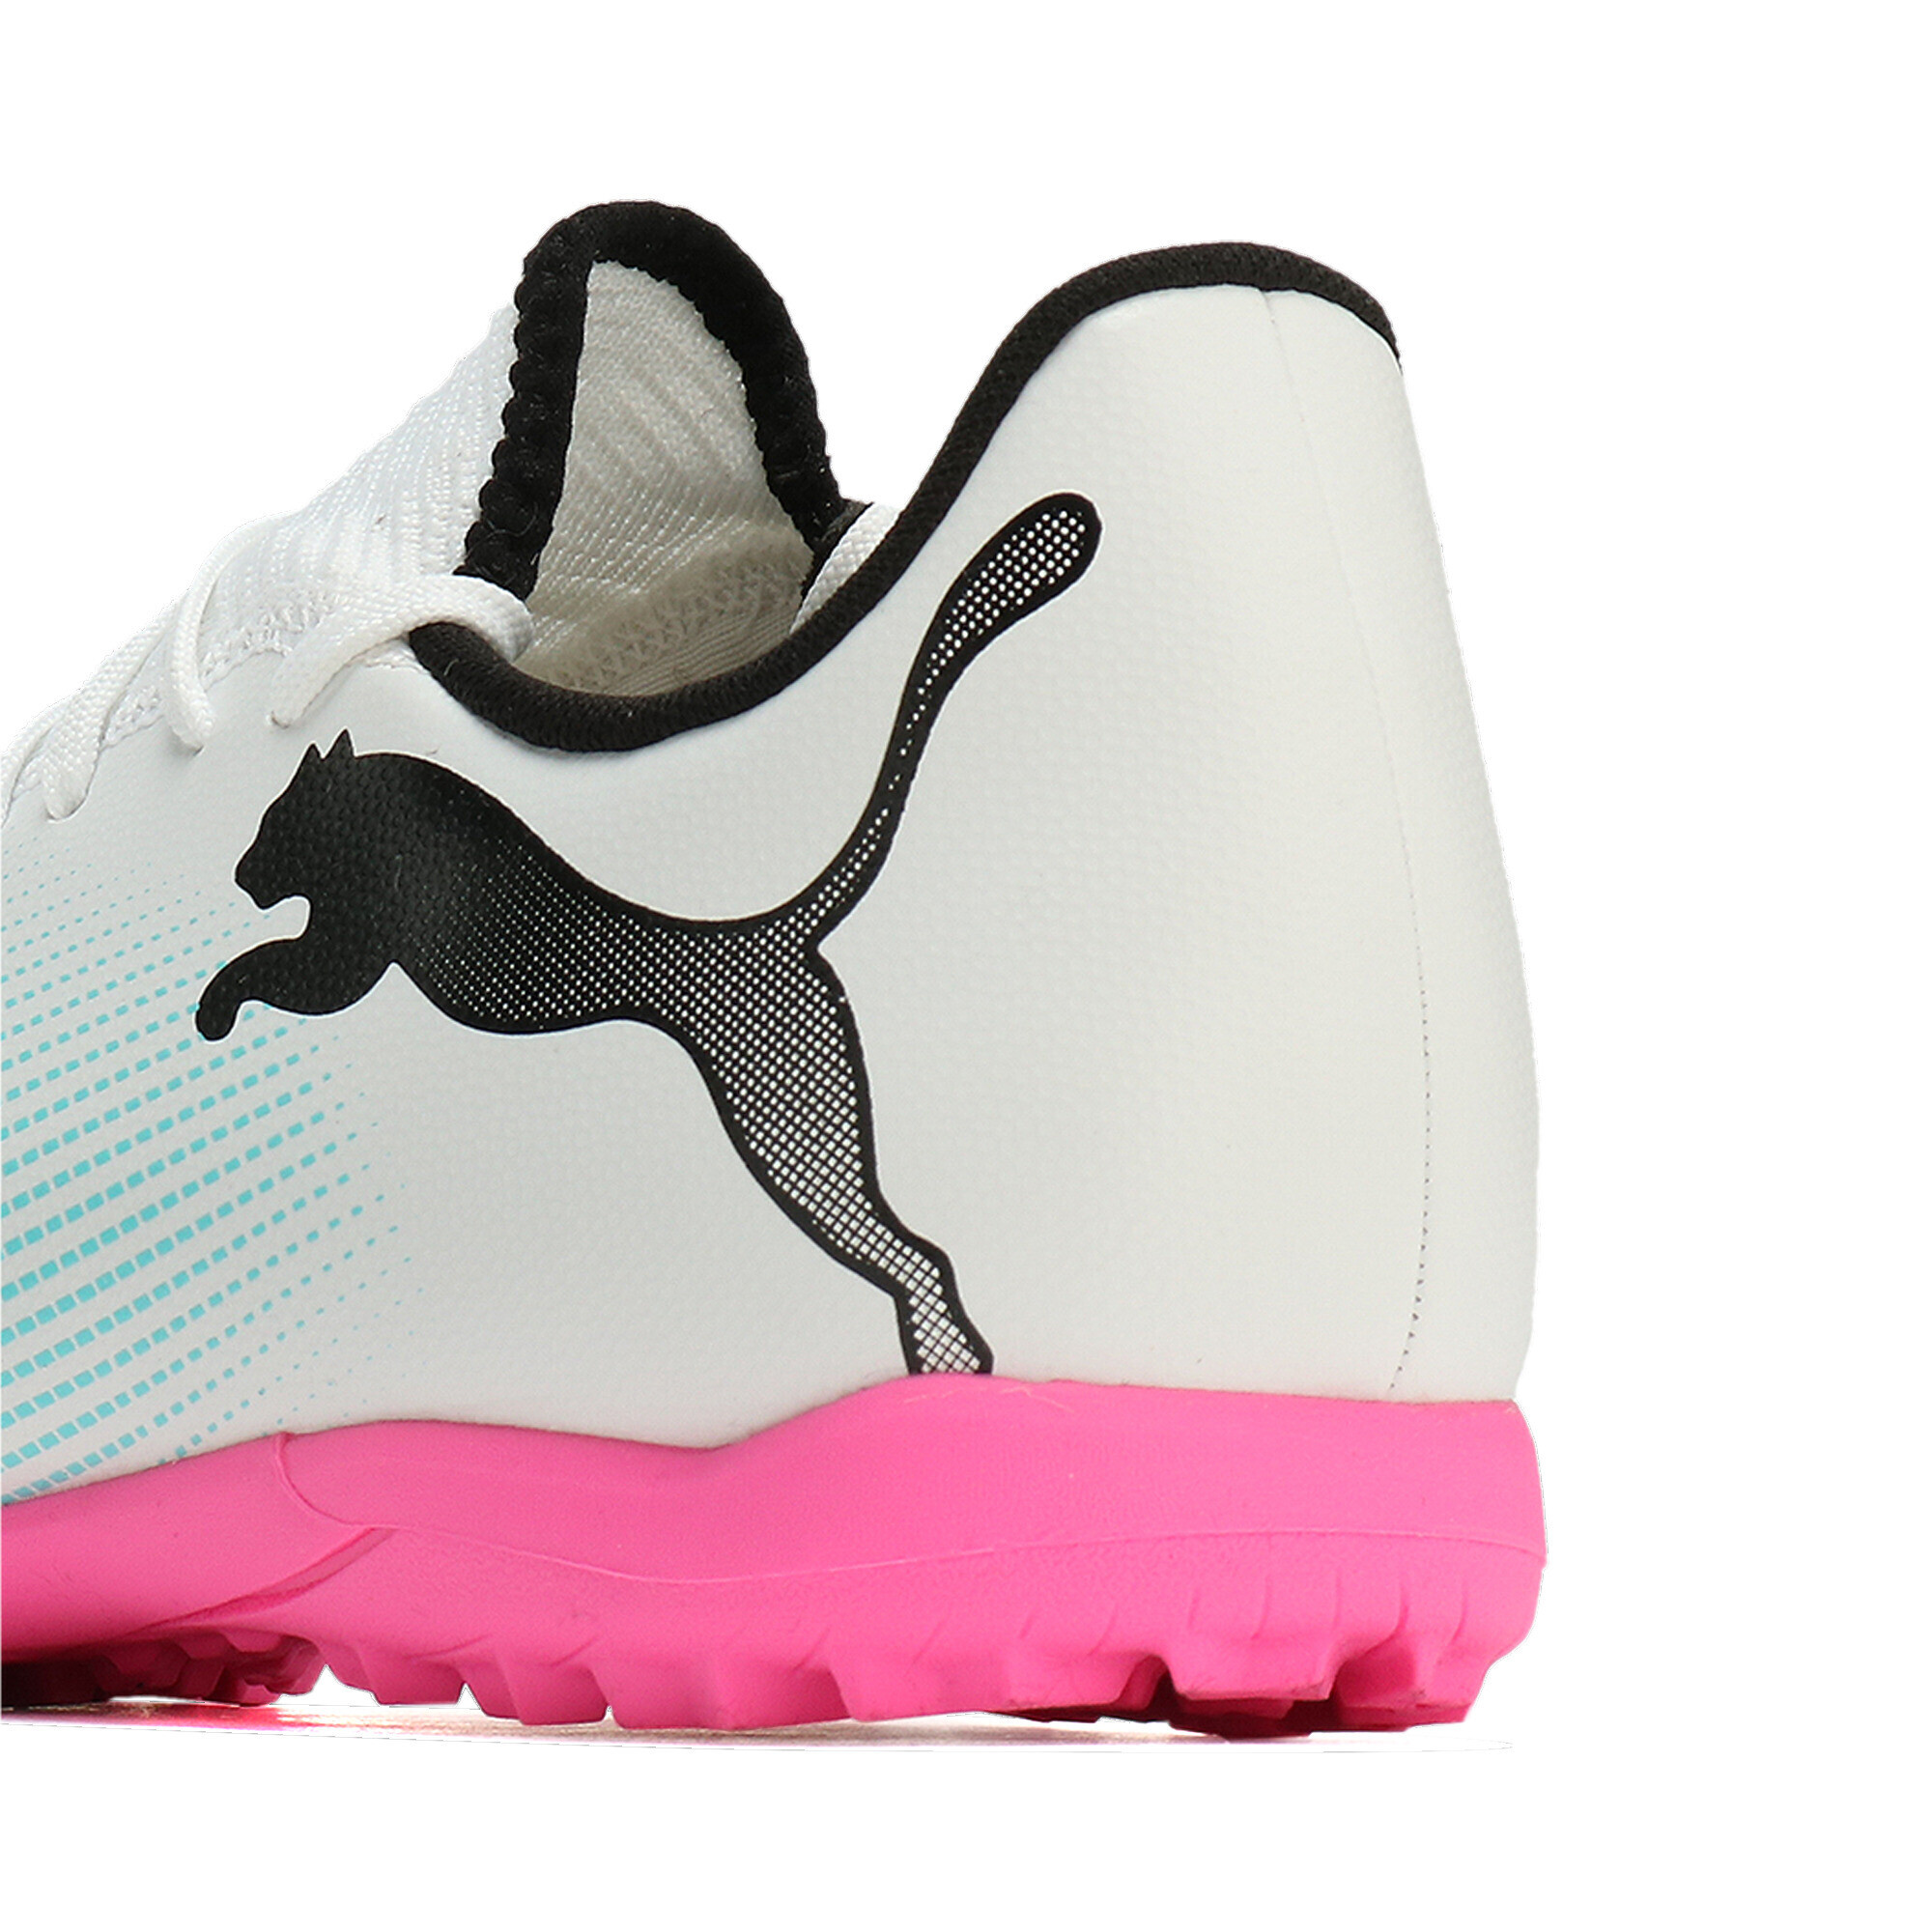 Men's PUMA FUTURE 7 PLAY TT Football Boots In White/Pink, Size EU 45